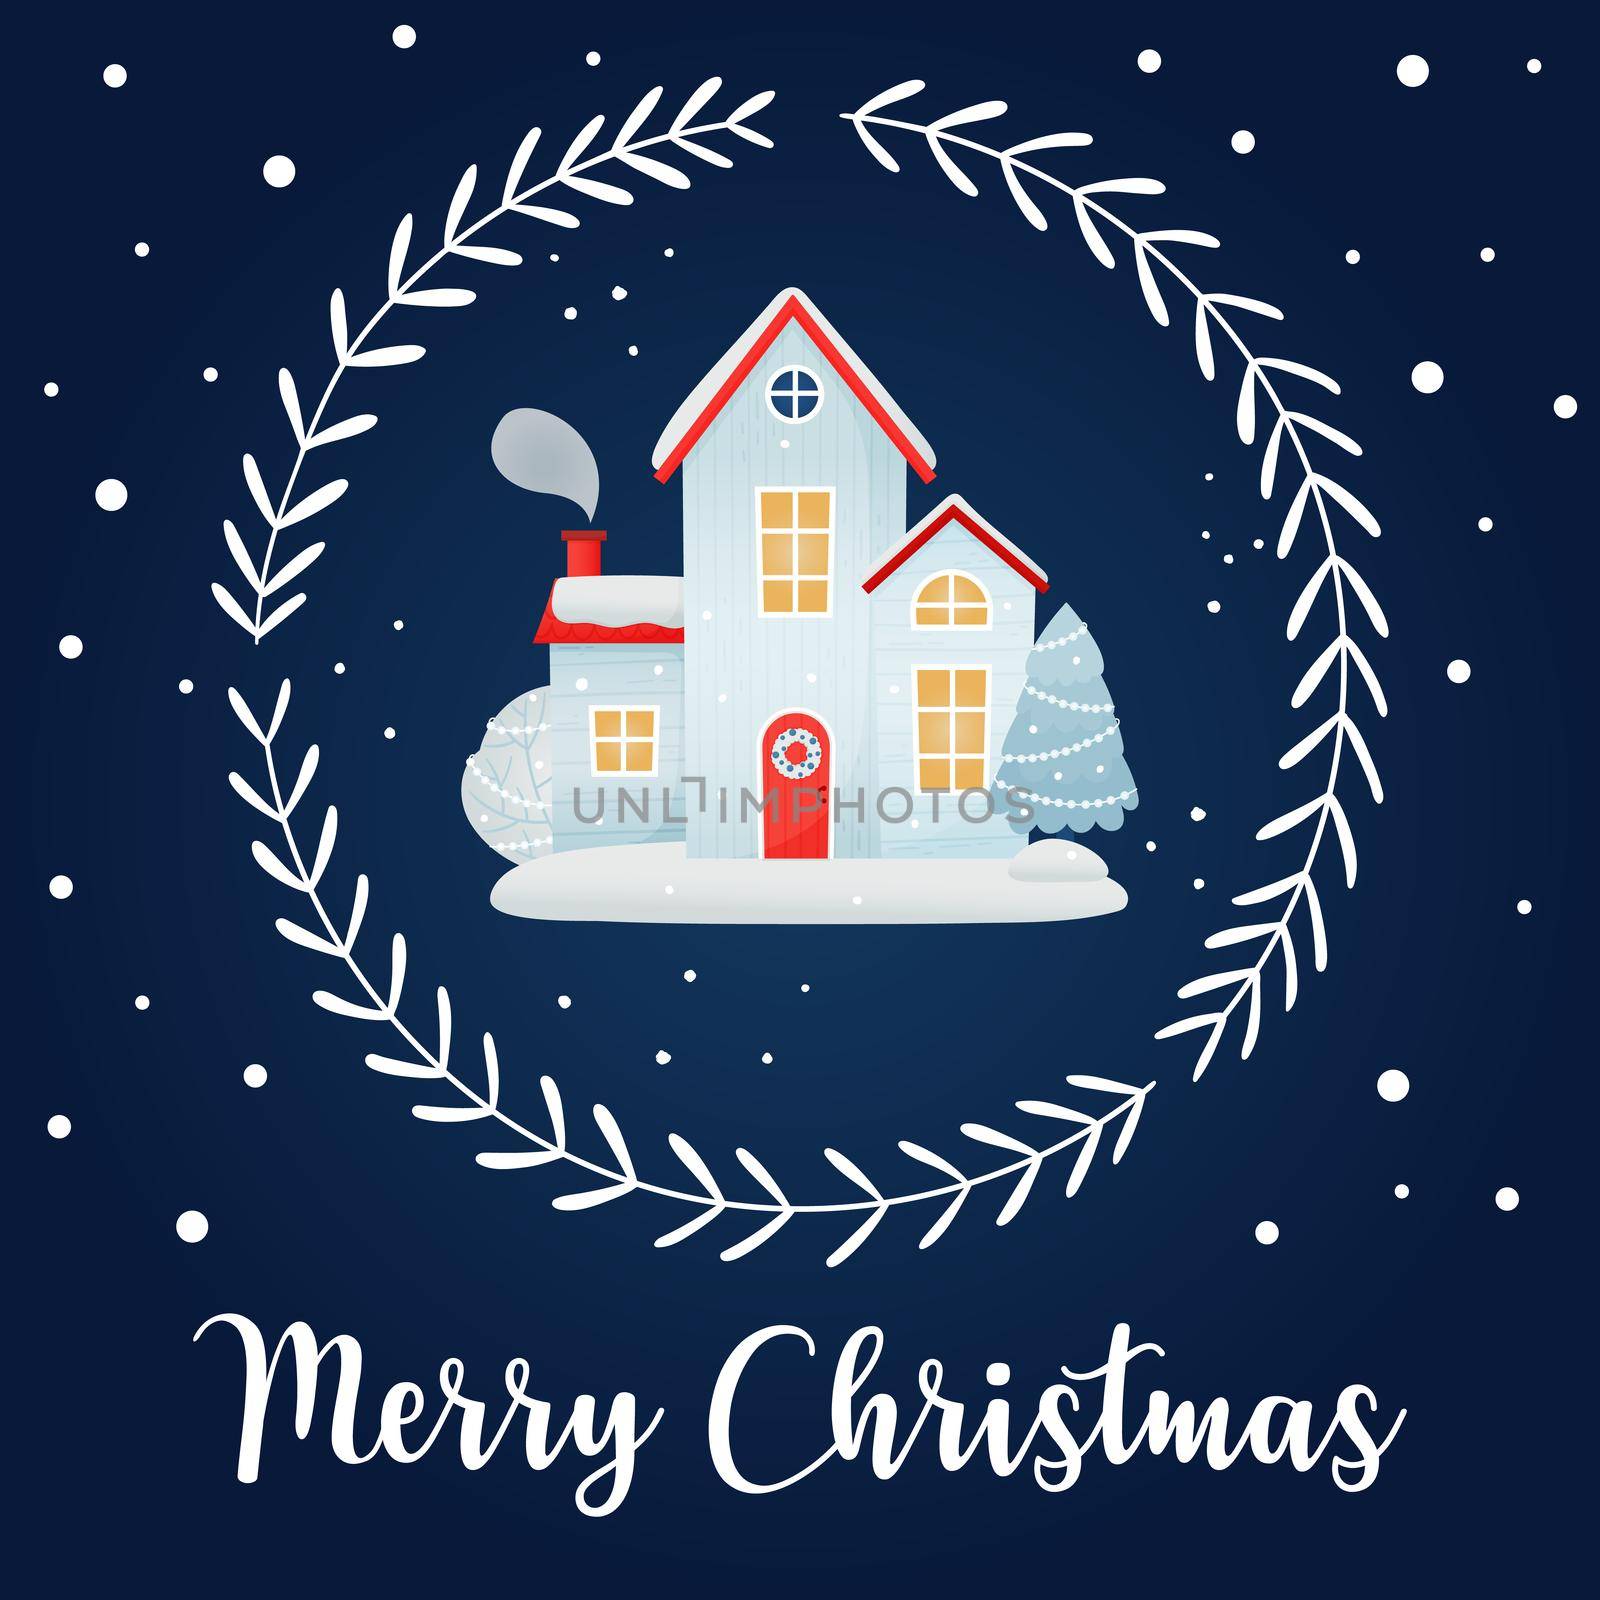 Merry Christmas. Christmas card with winter houses, a decorative wreath and an inscription on a dark blue background. Flat cartoon style. by Lena_Khmelniuk